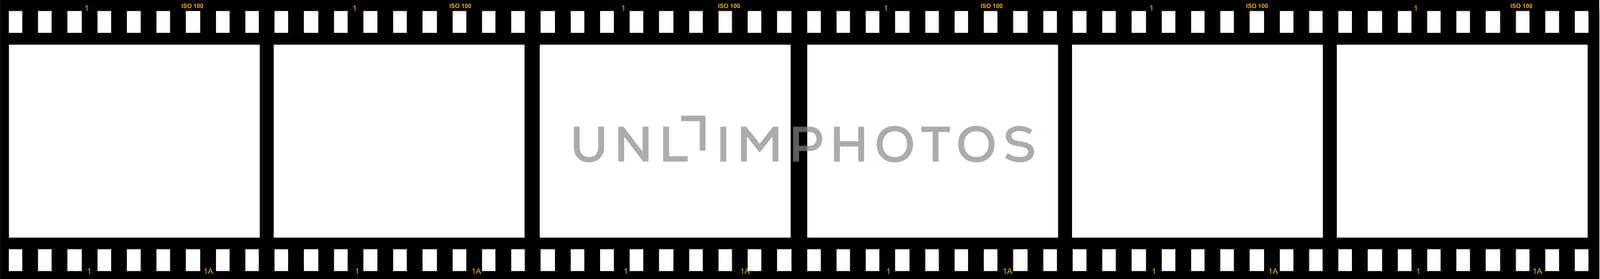 Six blank film frames by jeremywhat